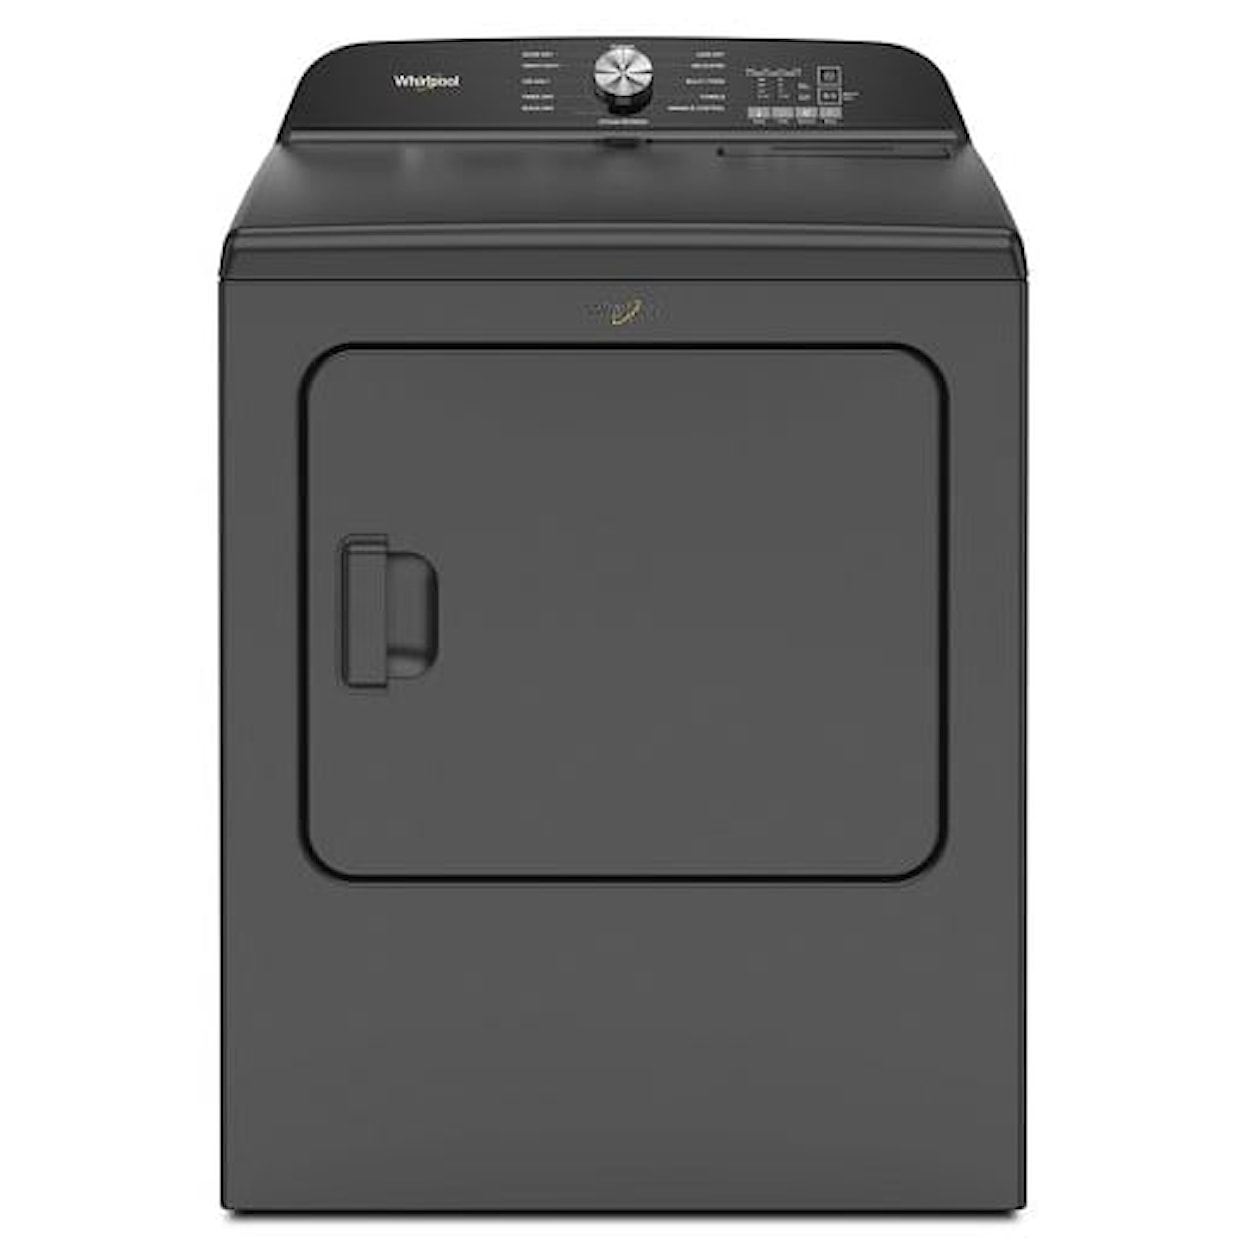 Whirlpool Laundry 7.0 Cu. Ft. Whirlpool Electric Dryer